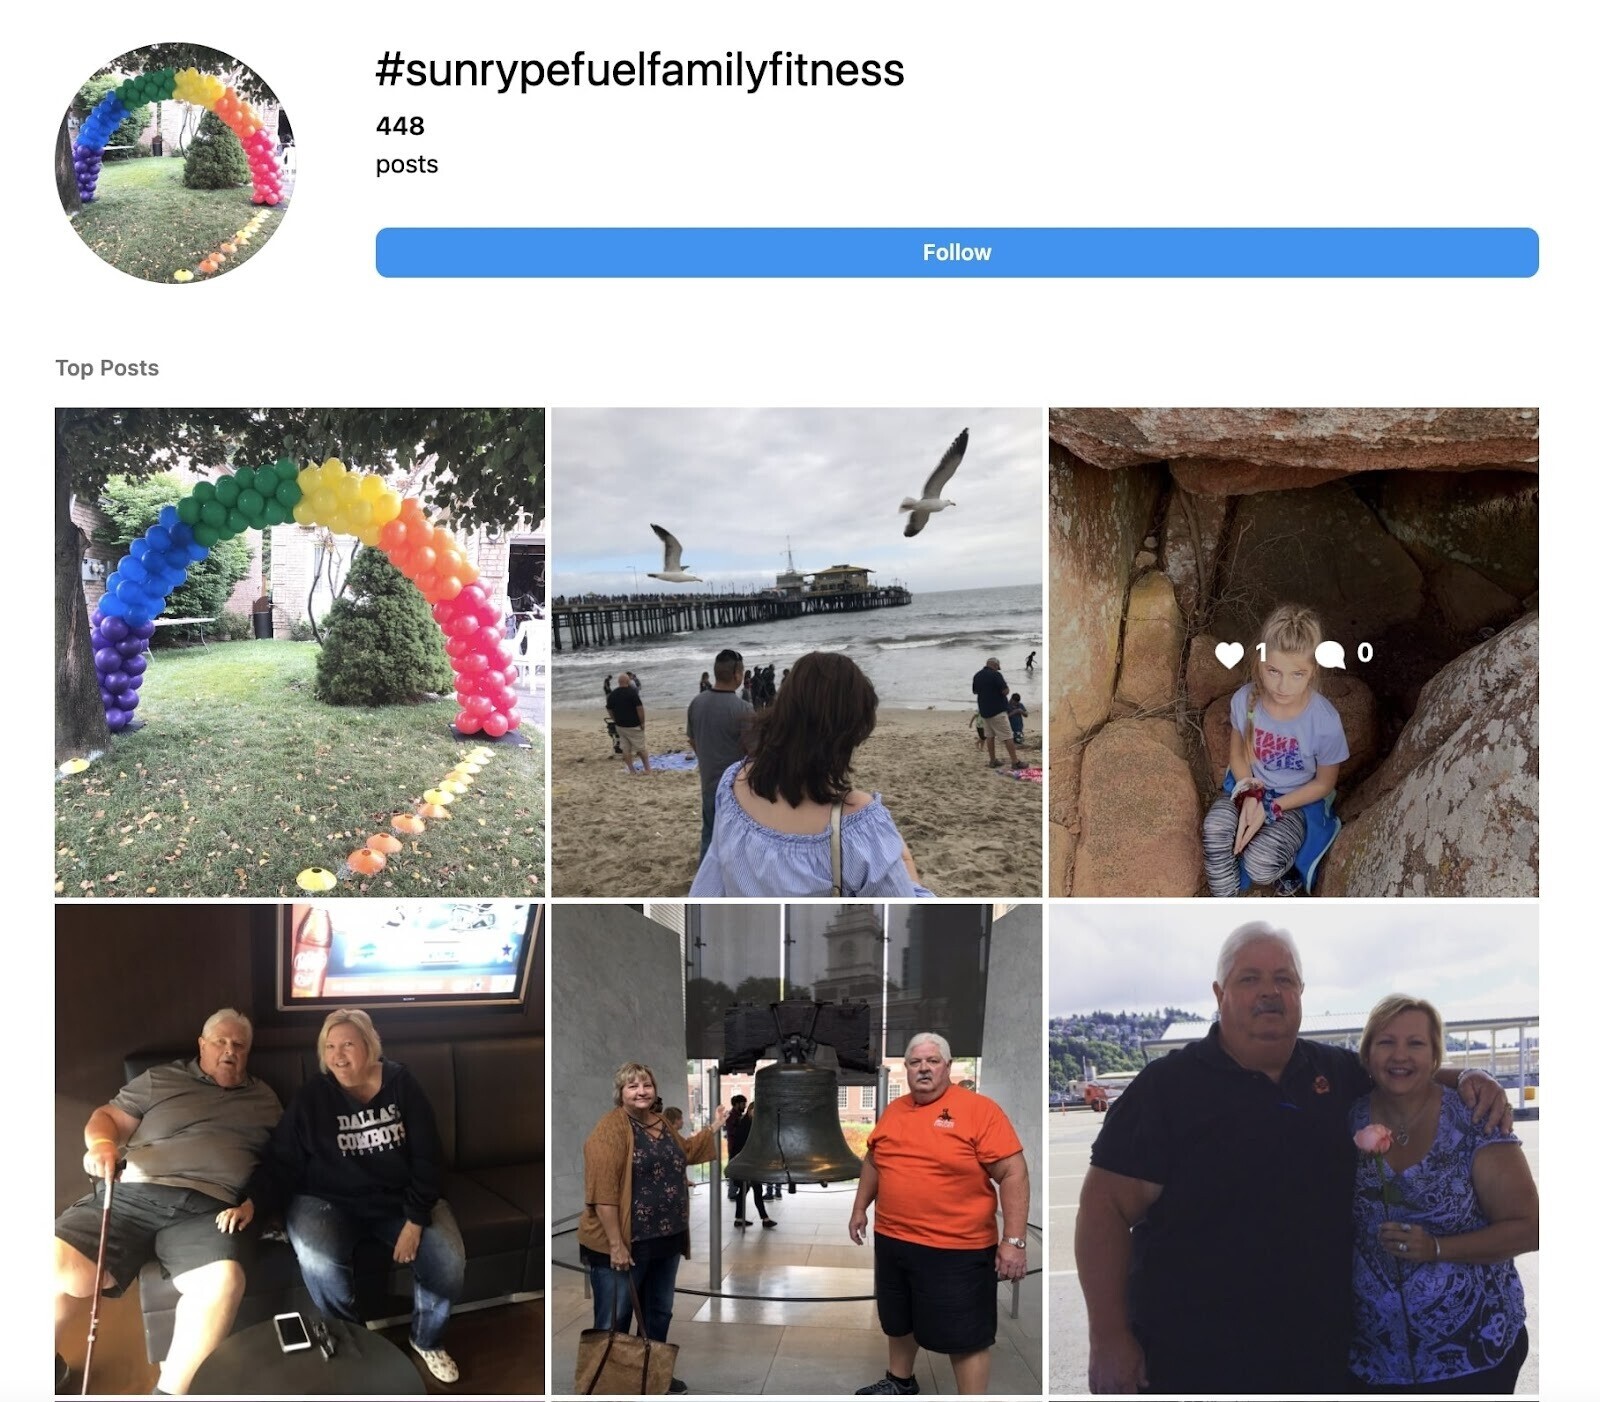 User generated content with a hashtag #sunrypefuelfamilyfitness